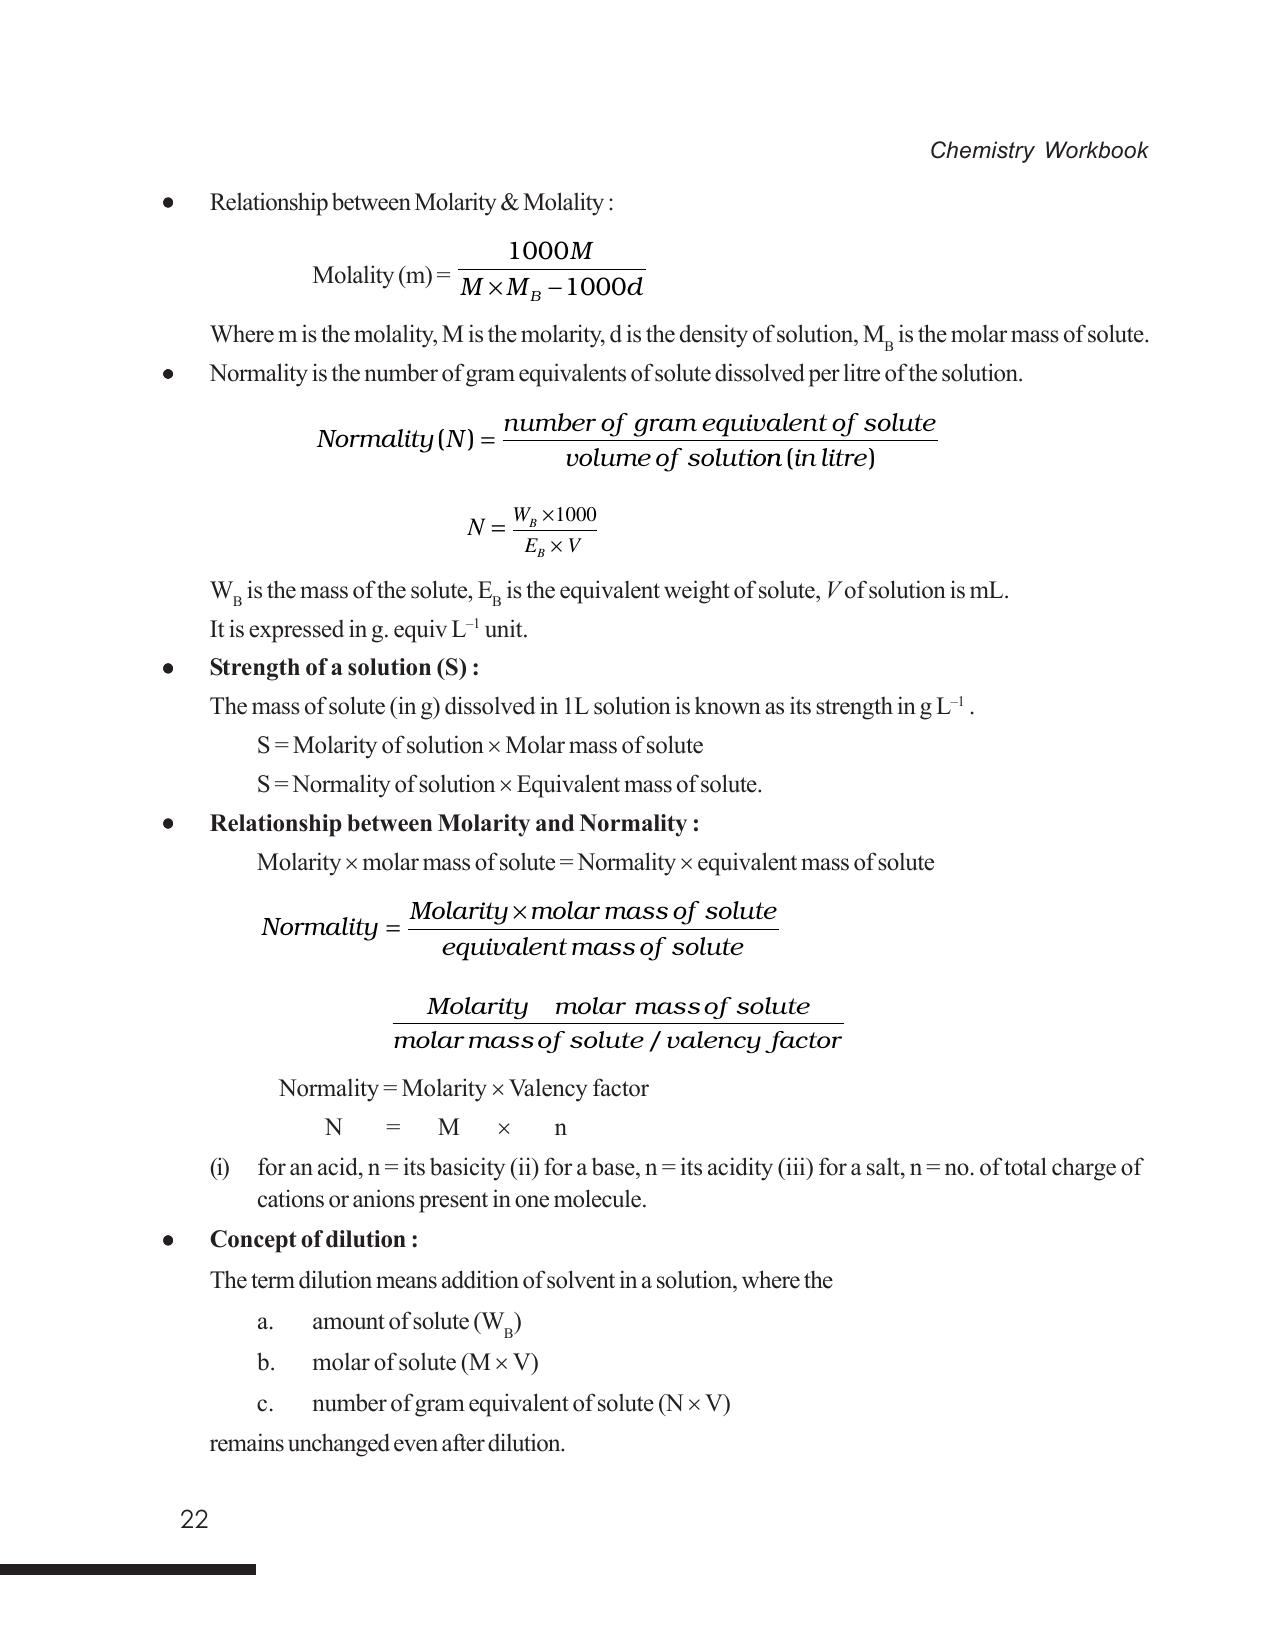 Tripura Board Class 12 Chemistry English Version Workbooks - Page 28